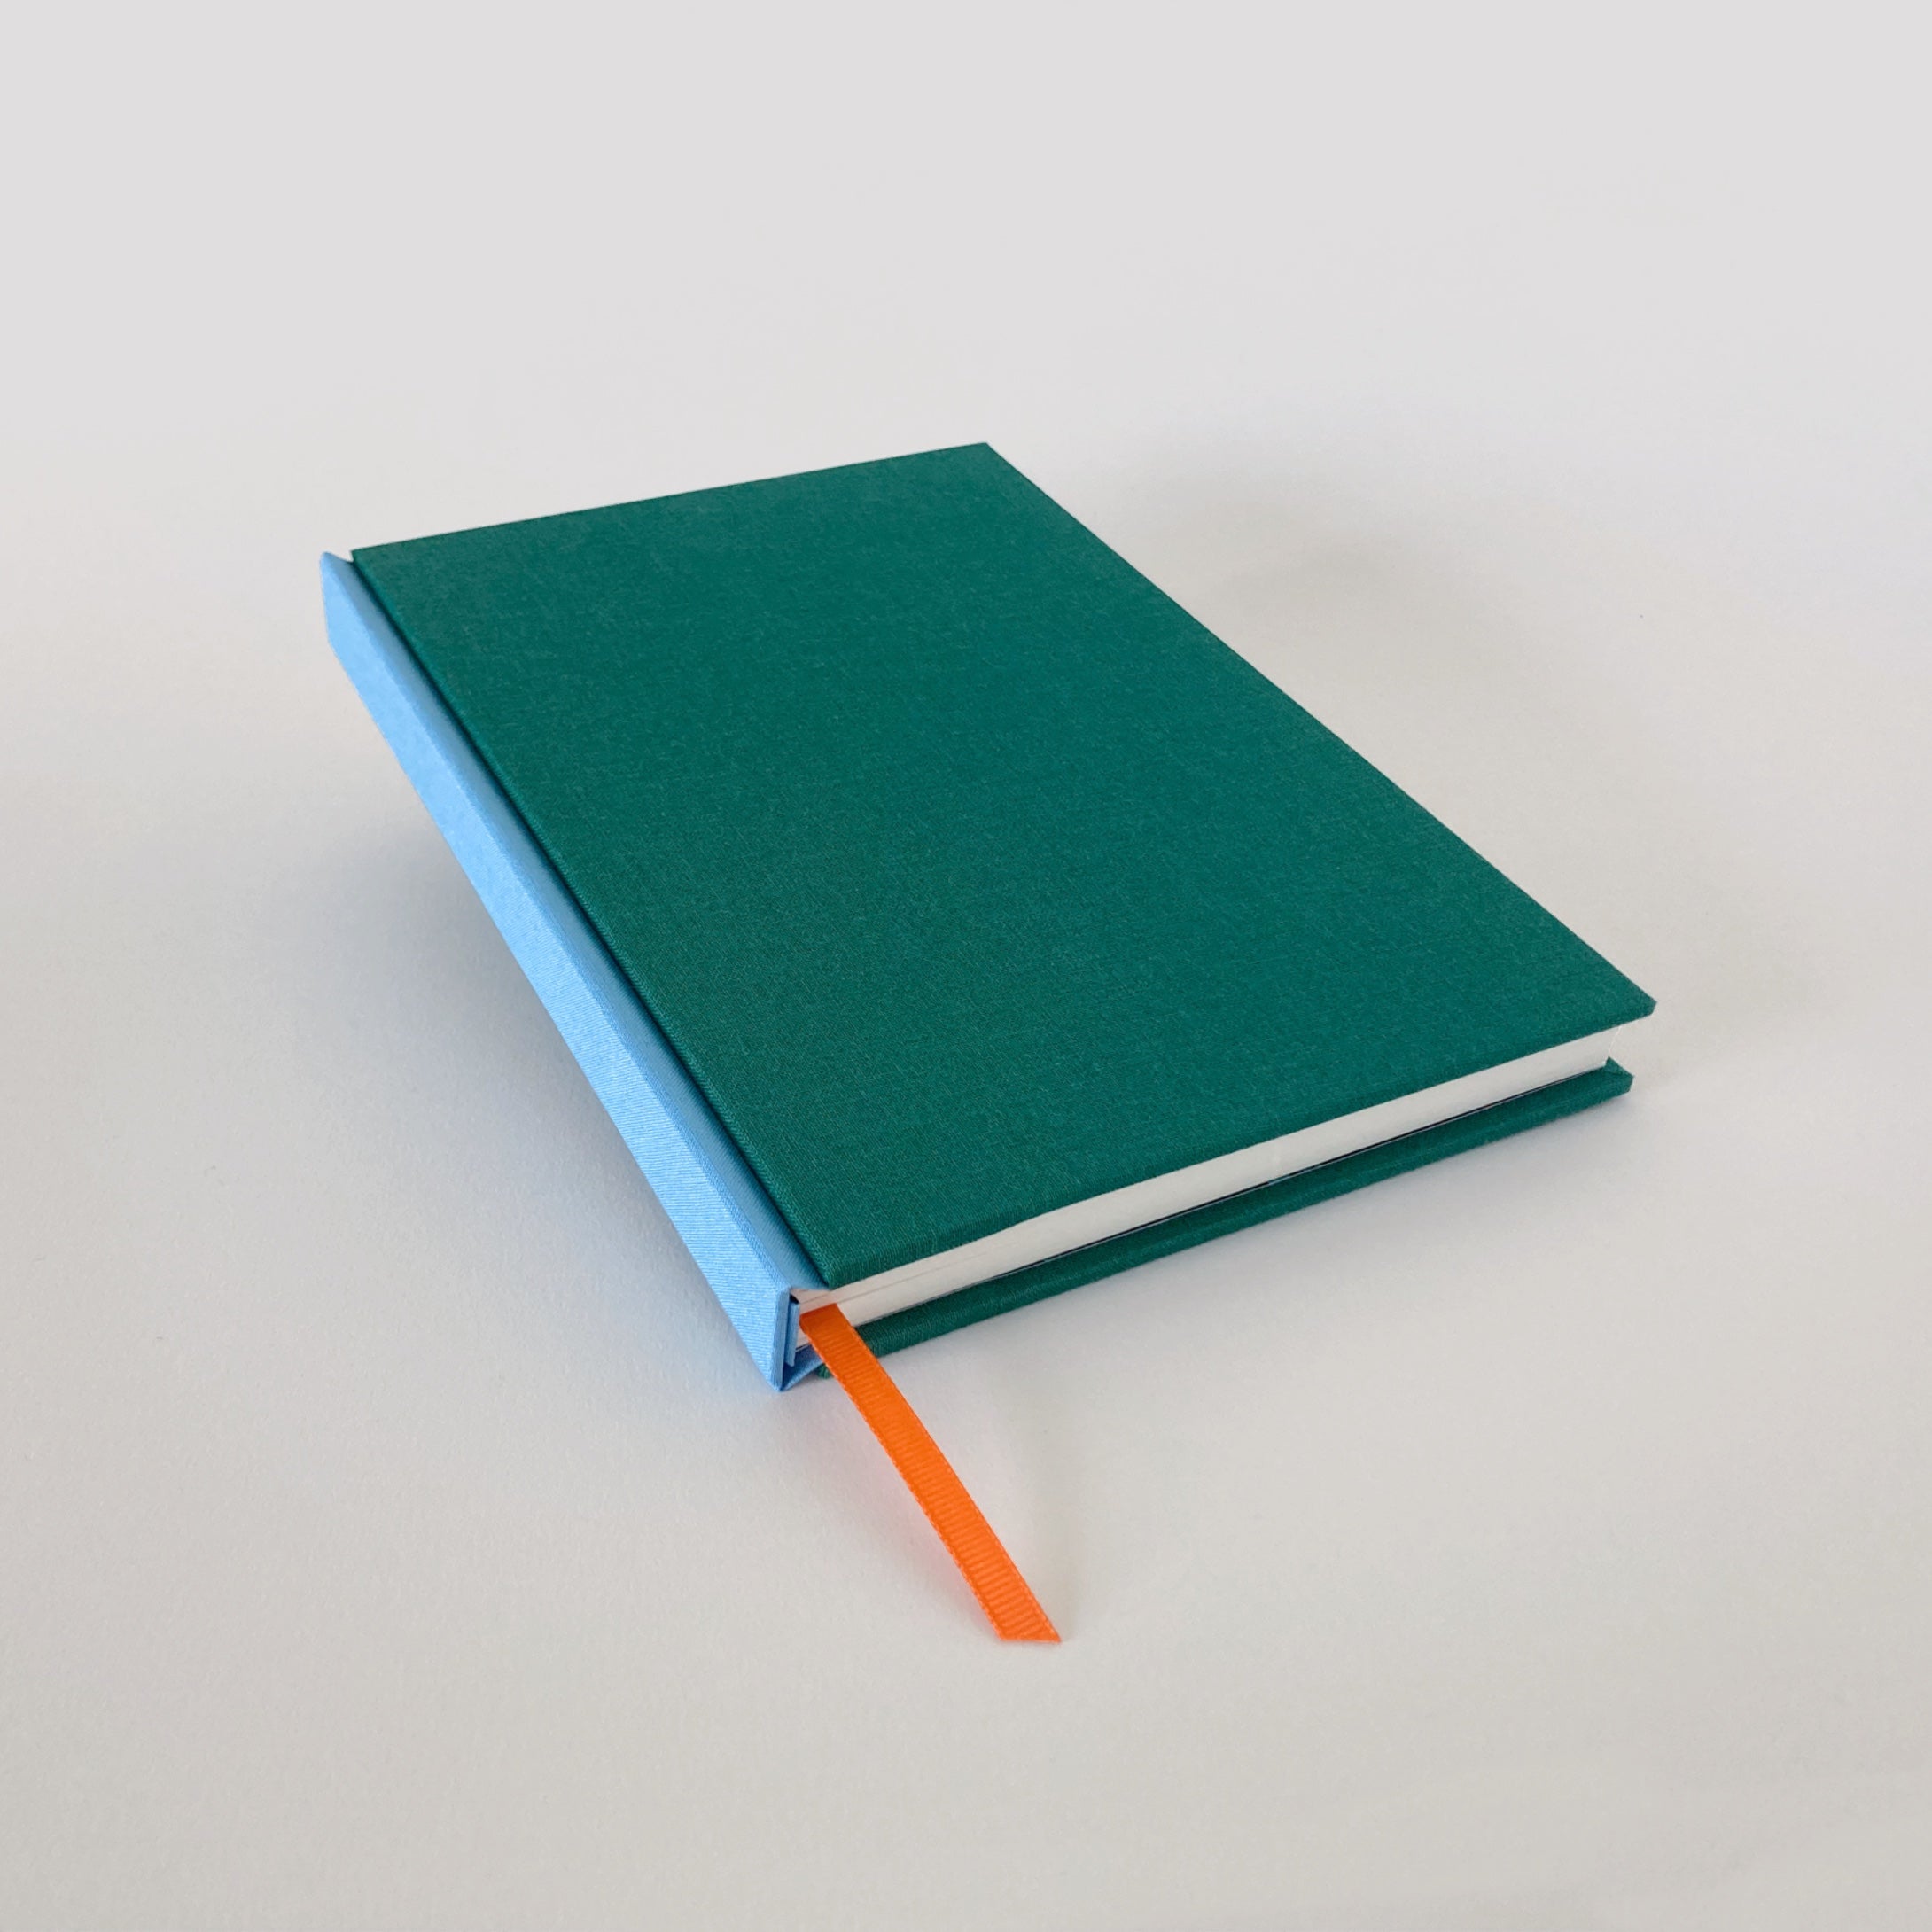 Green clothbound sketchbook with blue spine and orange ribbon bookmark.